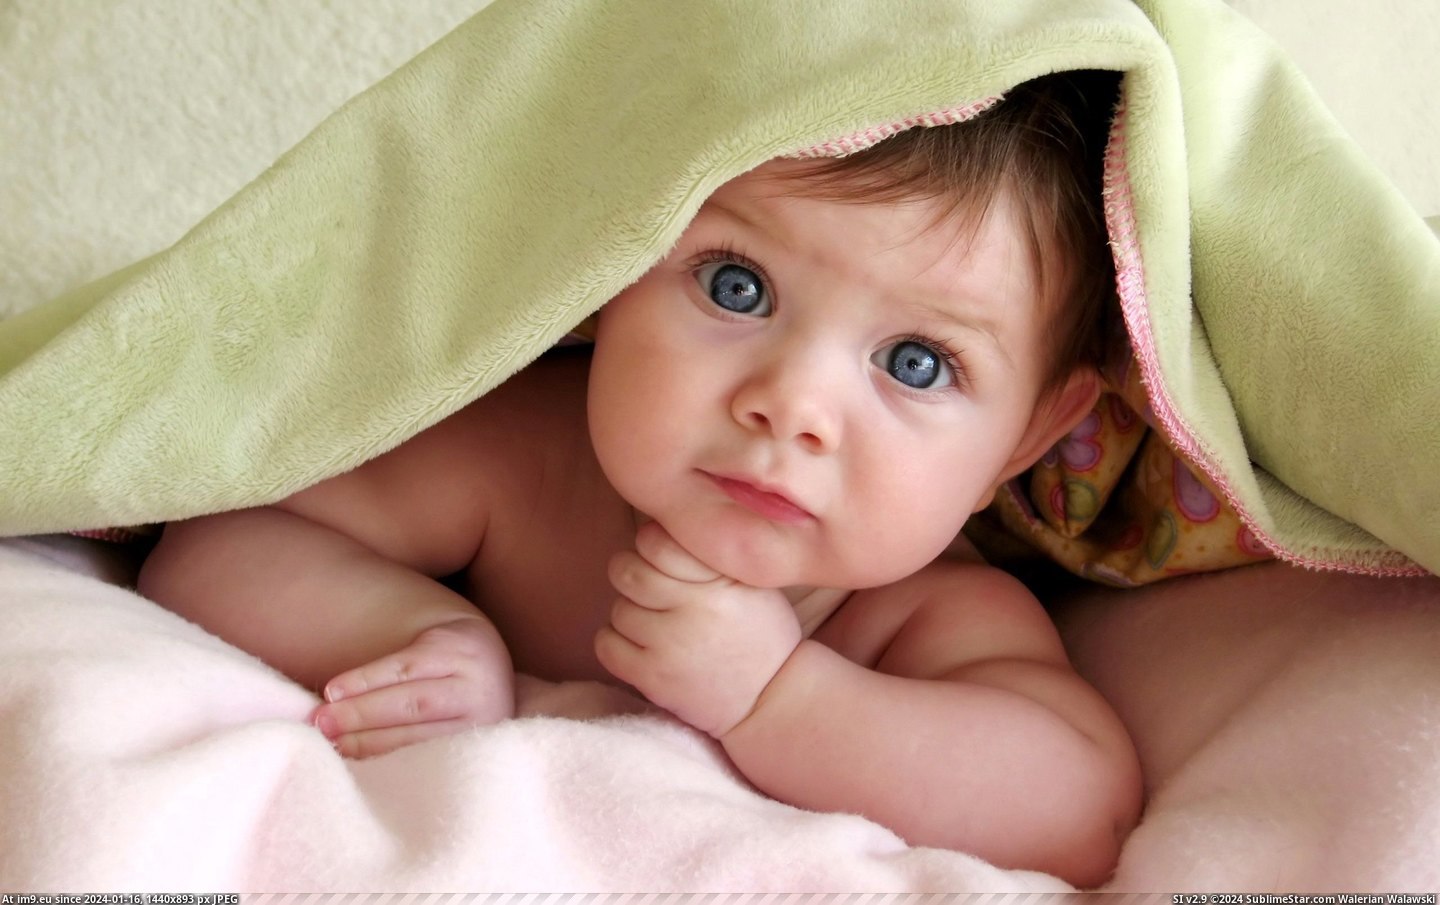 #Cute #Wallpaper #Starring #Wide #Baby Cute Baby Starring Wide HD Wallpaper Pic. (Obraz z album Unique HD Wallpapers))